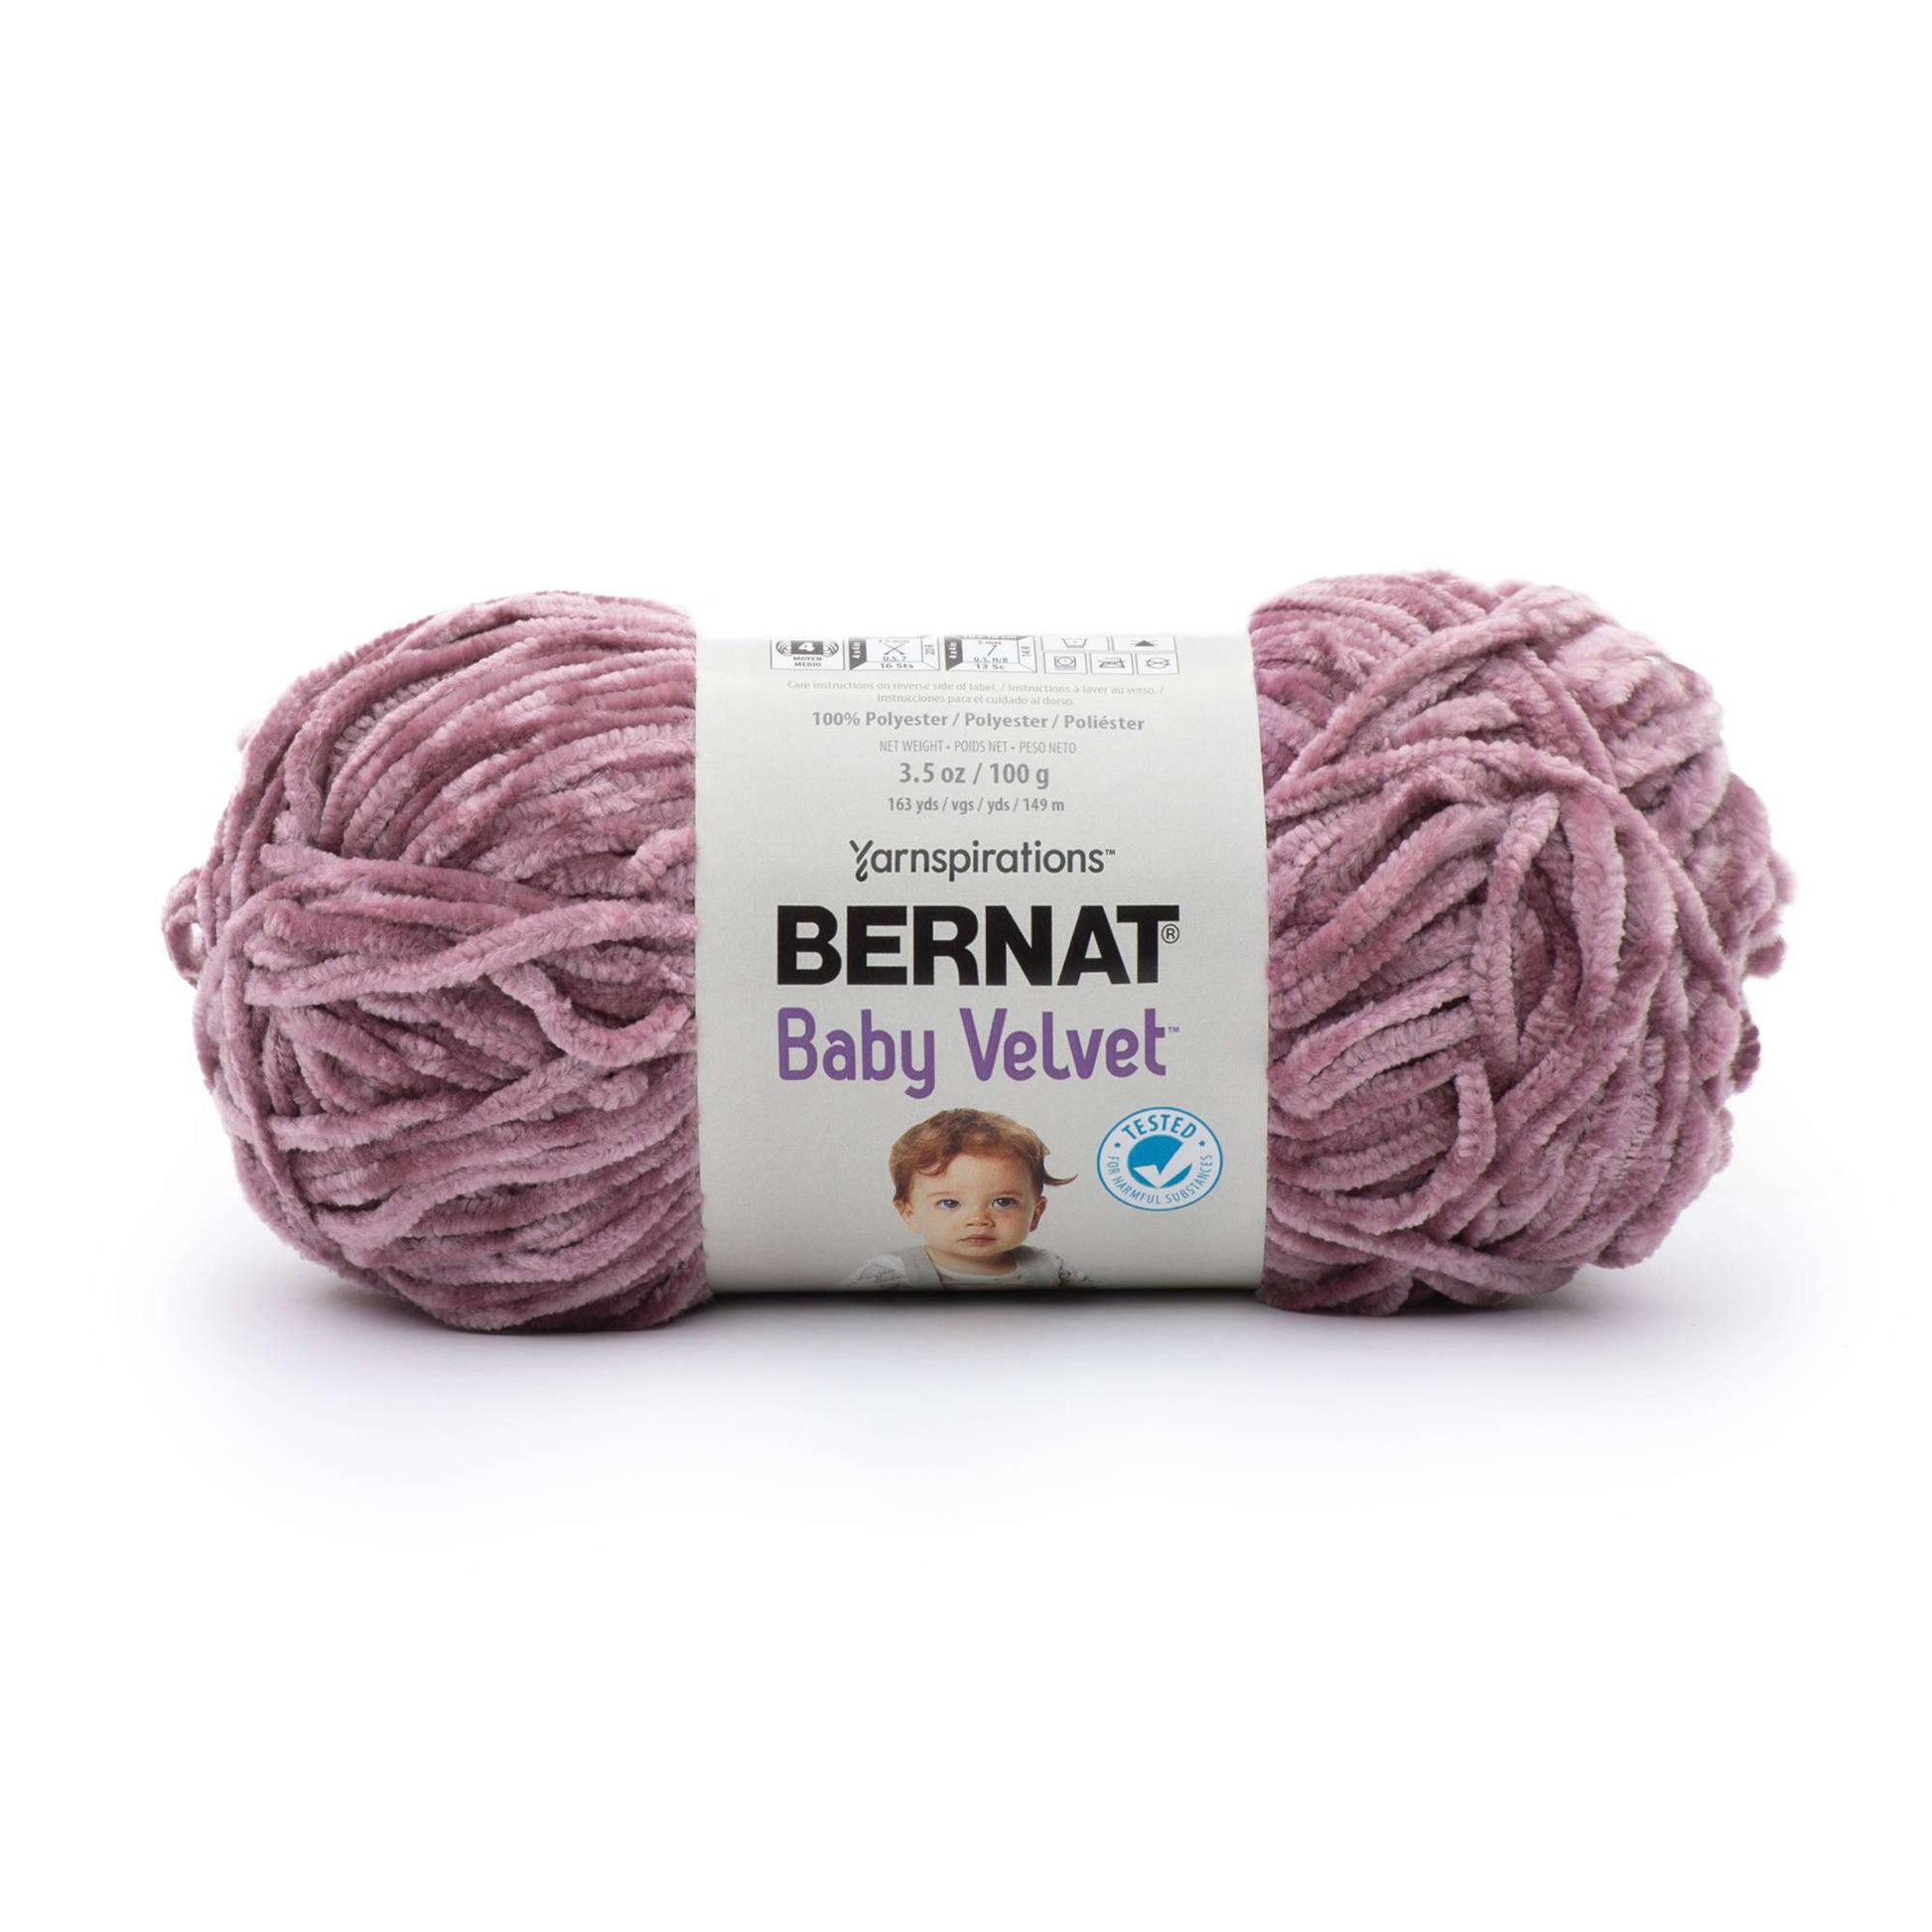 Bernat Baby Velvet Yarn - Discontinued shades